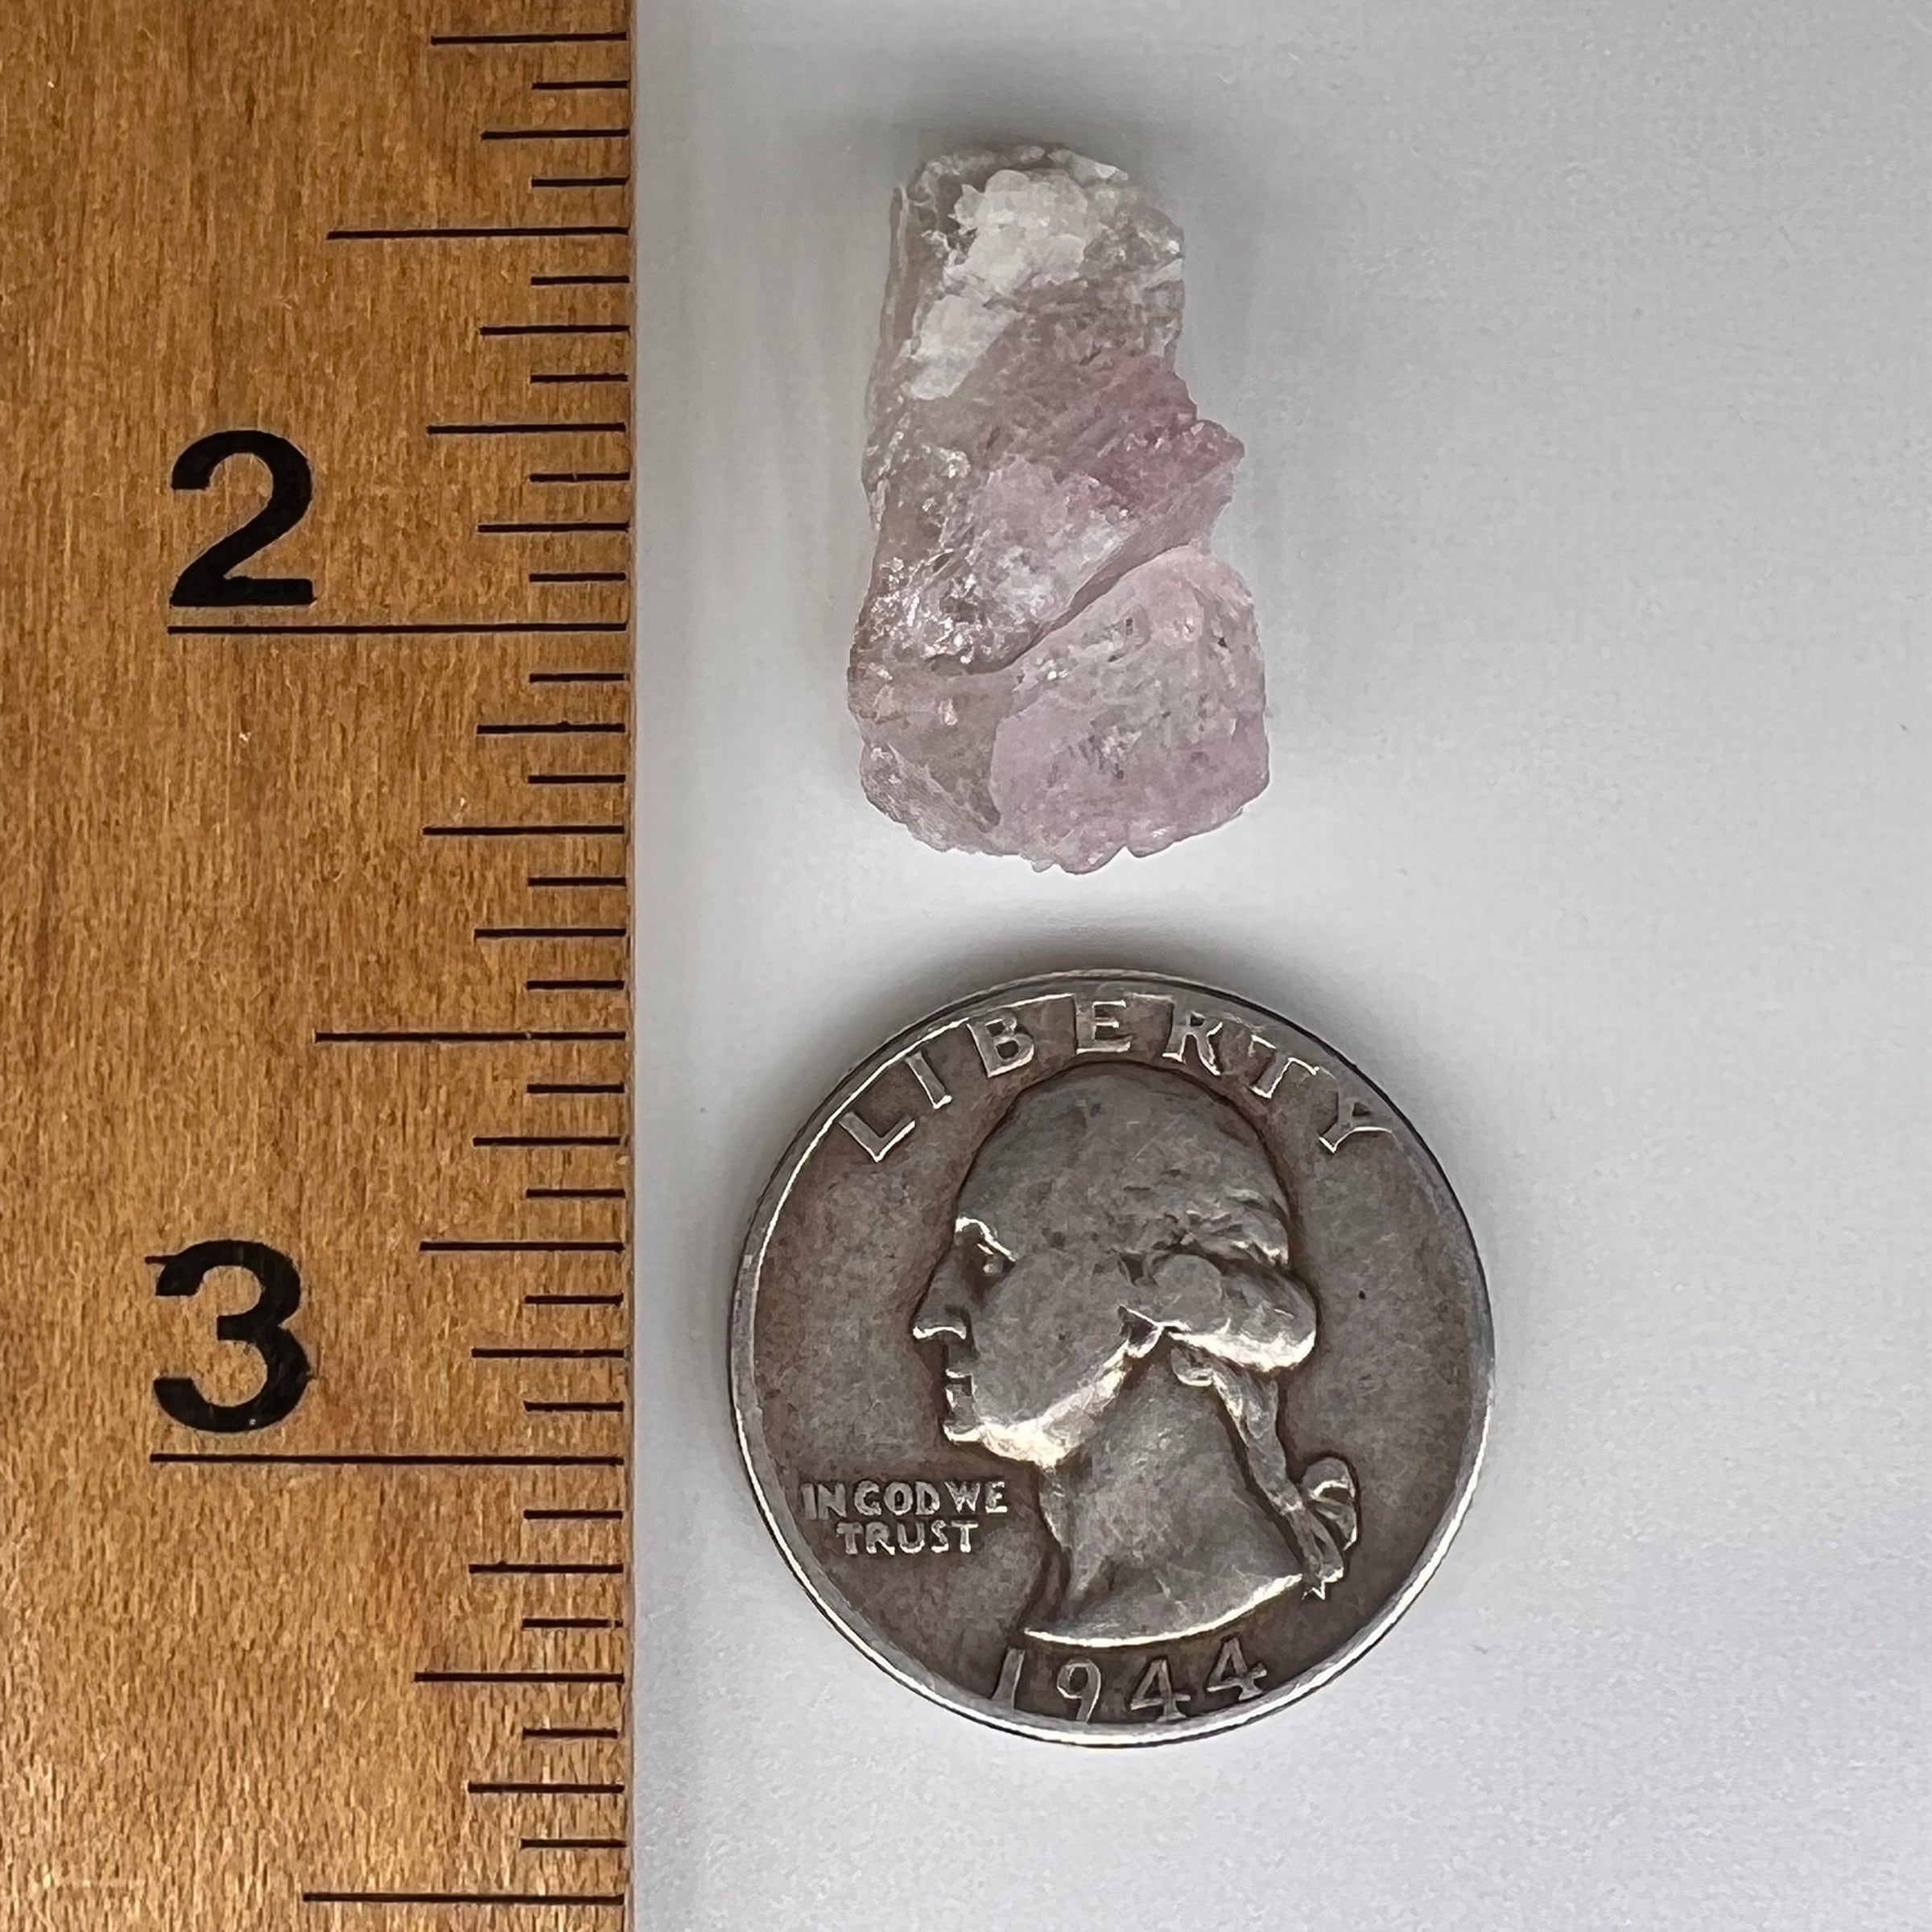 Crystalized Rose Quartz #160-Moldavite Life